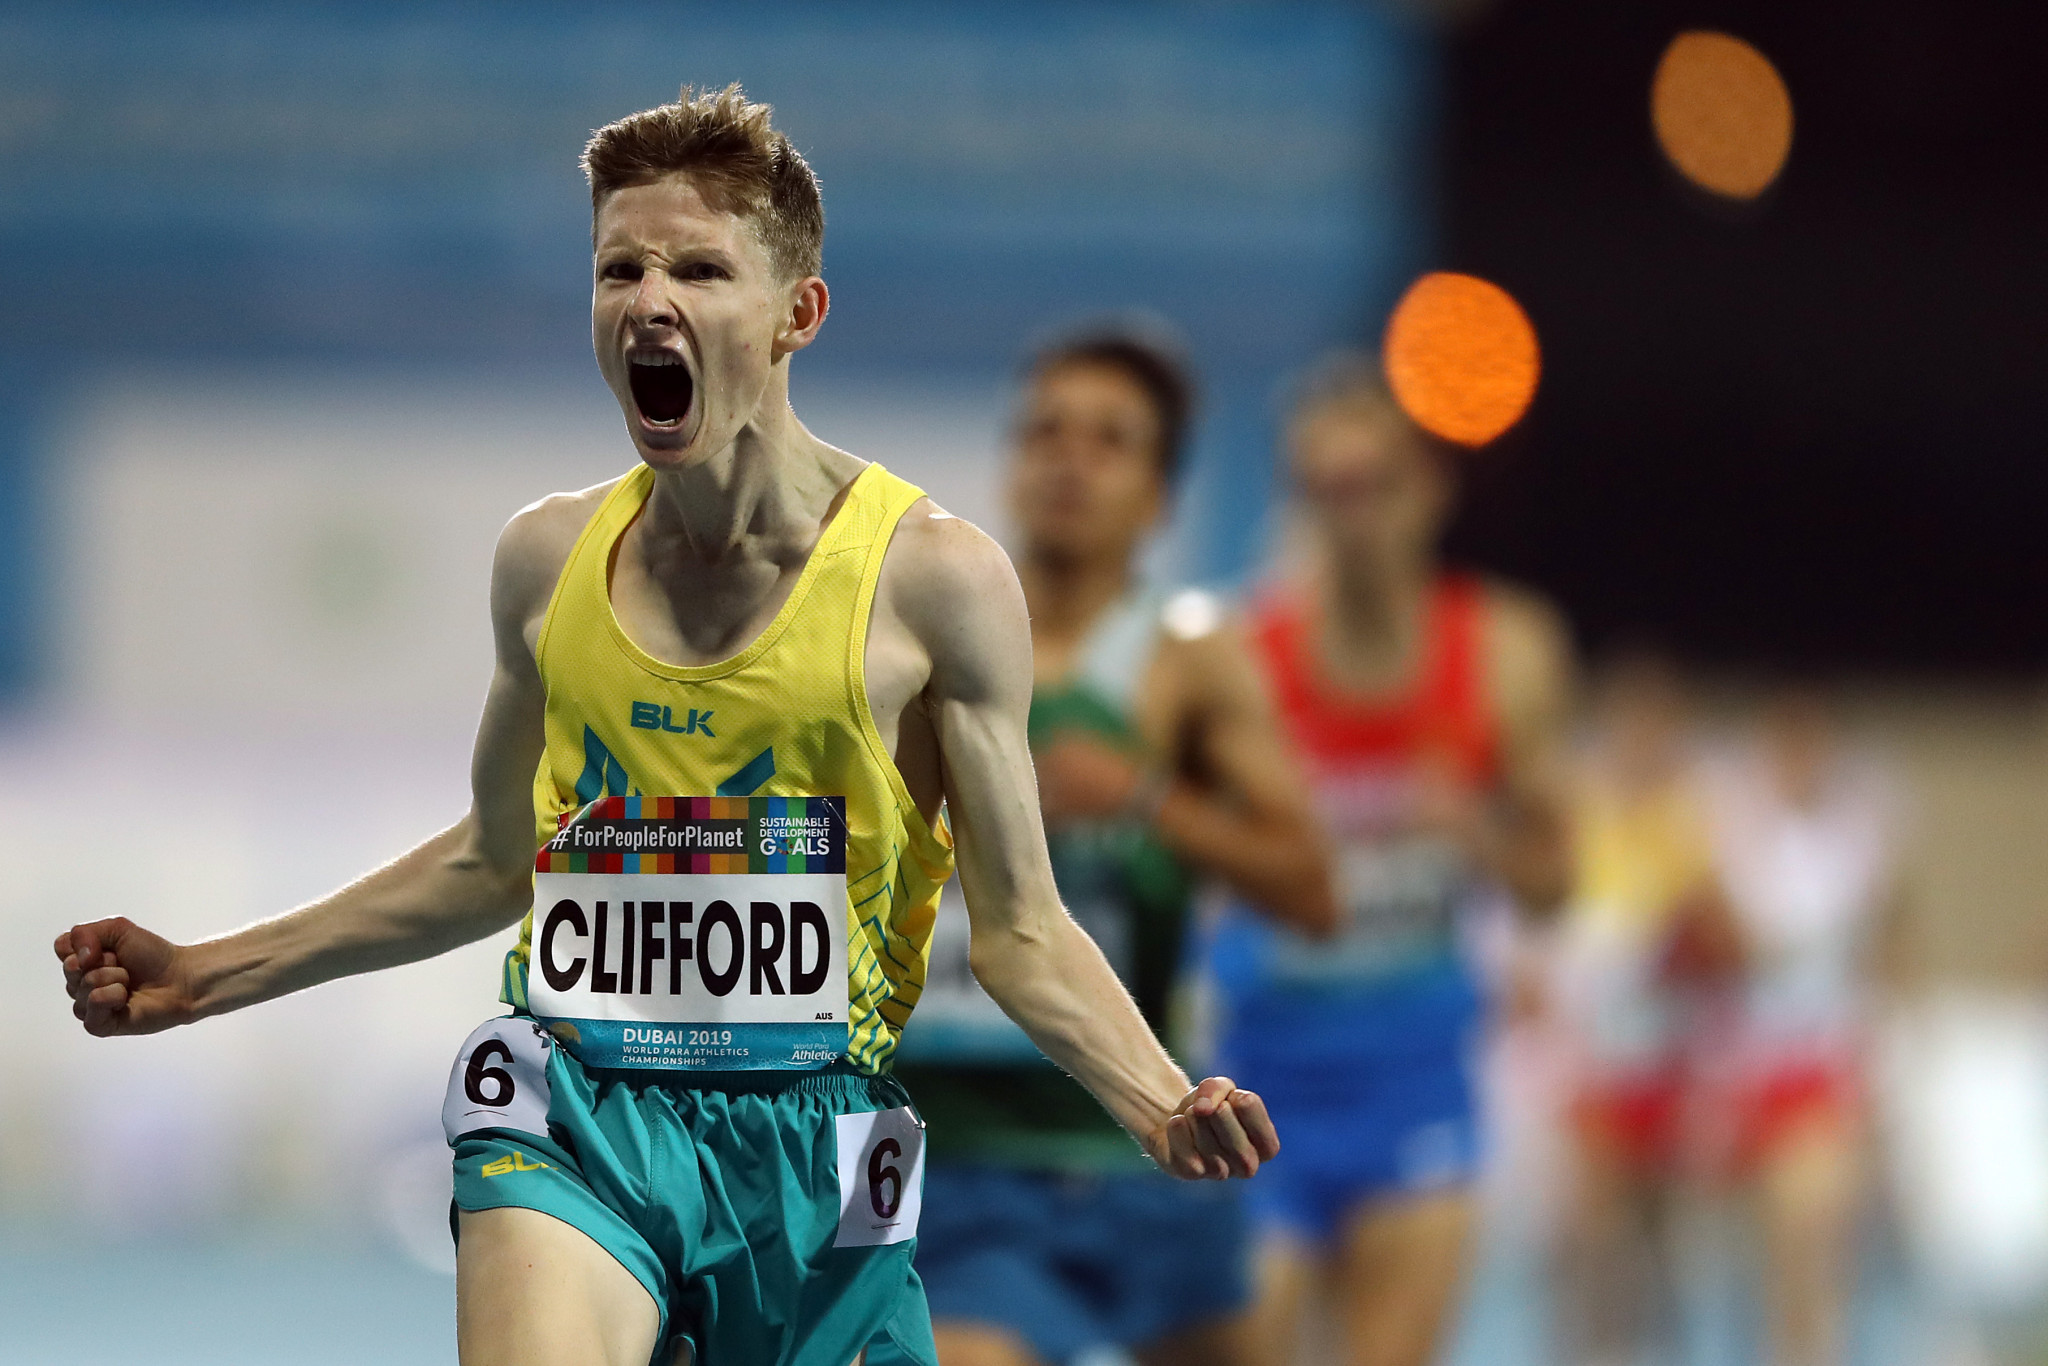 Australian breaks world record to claim 1500m T13 gold at World Para Athletics Championships